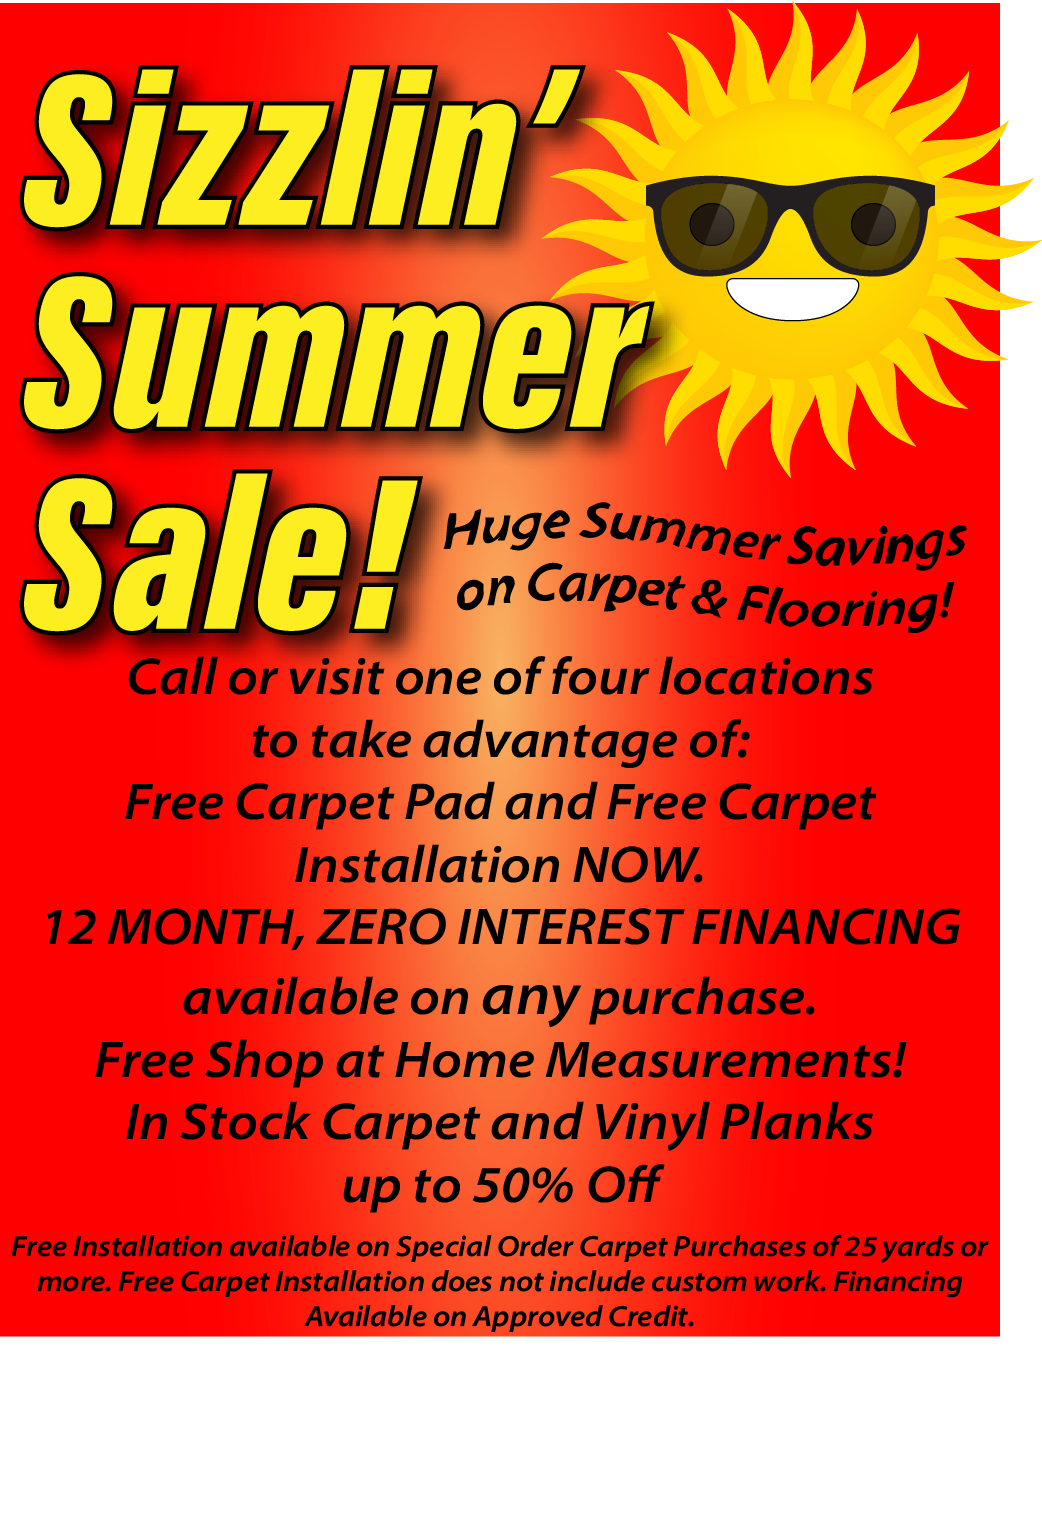 carpet financing, flooring no interest, flooring sale, area rugs near me